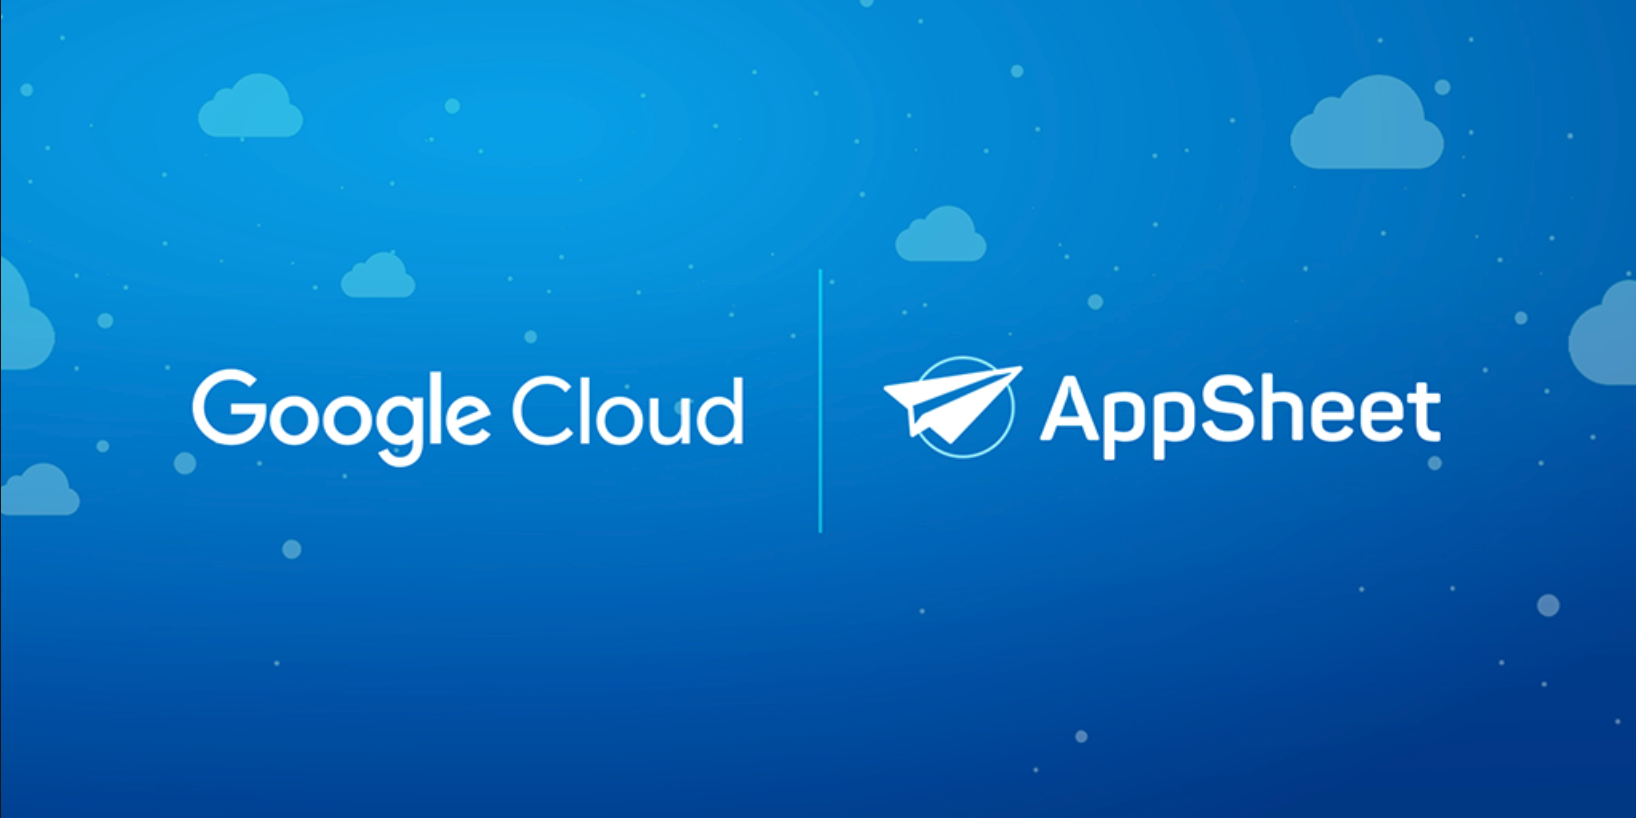 google cloud inwestycja w appsheet 